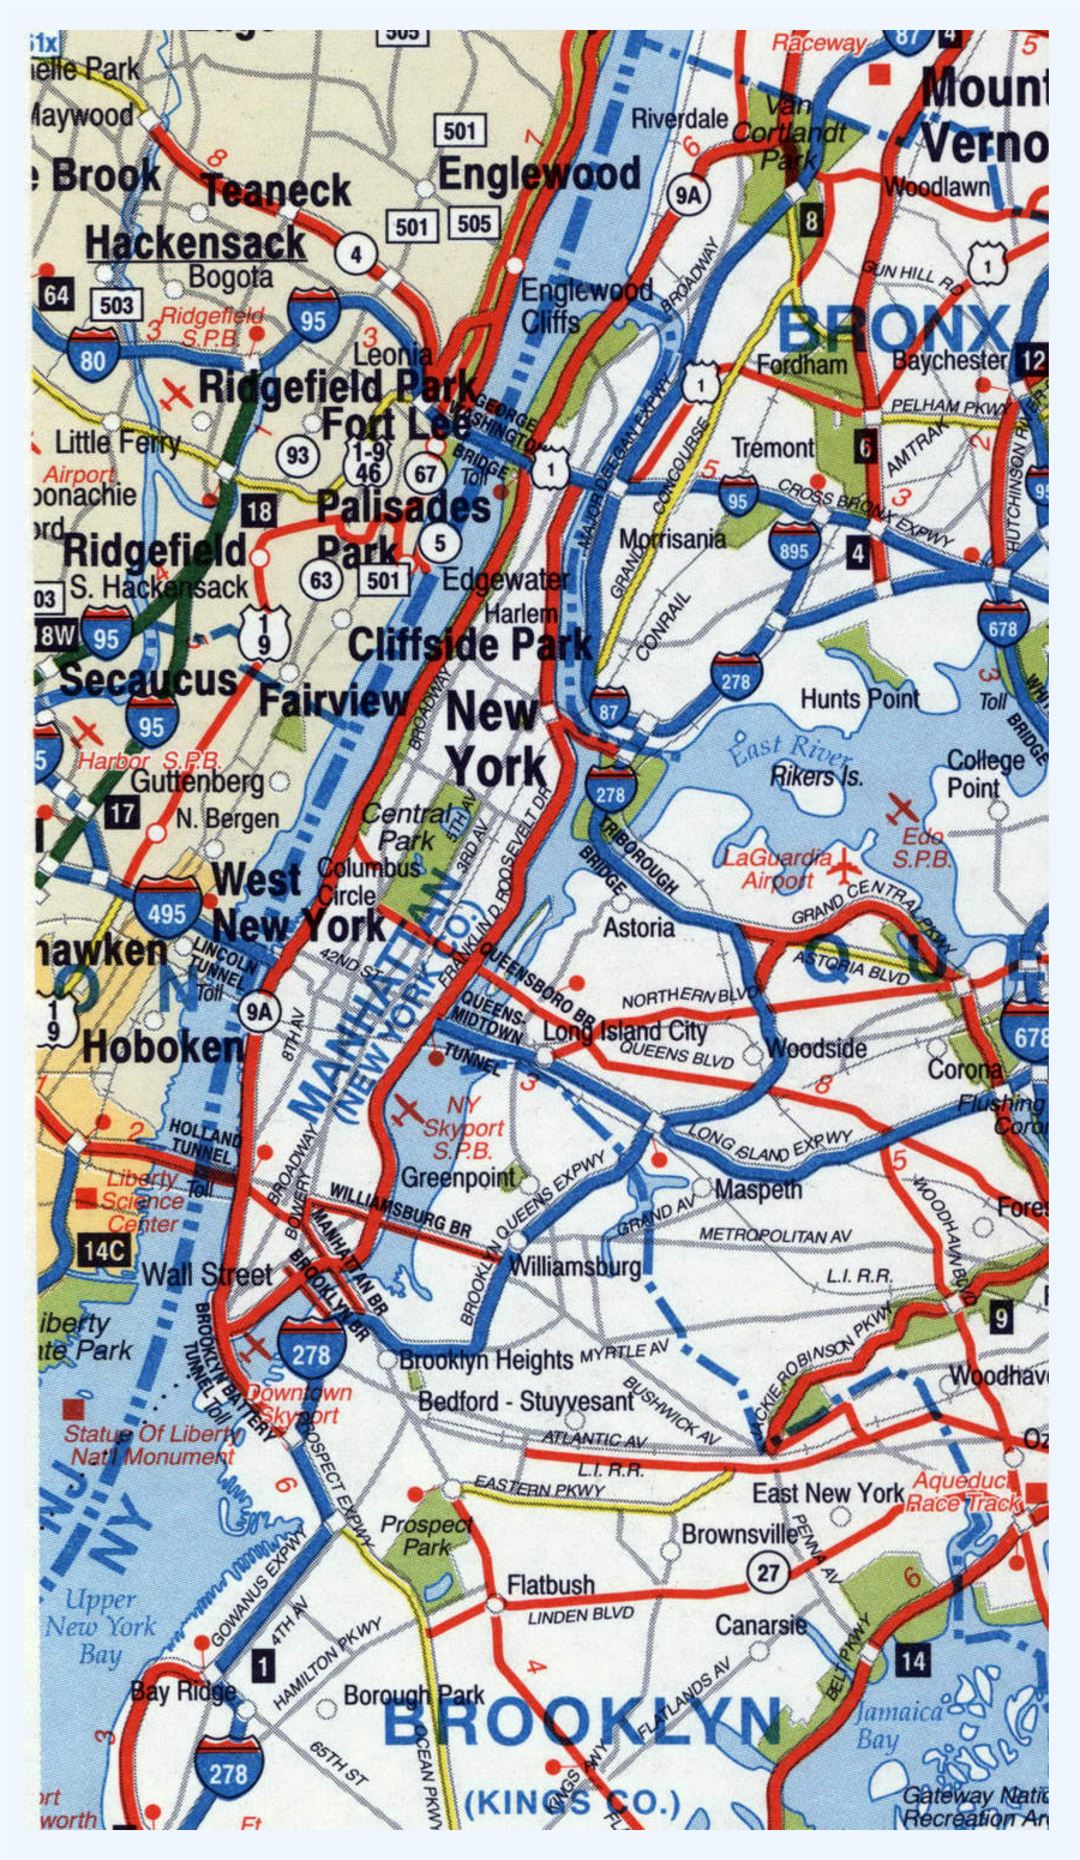 Highways map of Manhattan and surrounding area